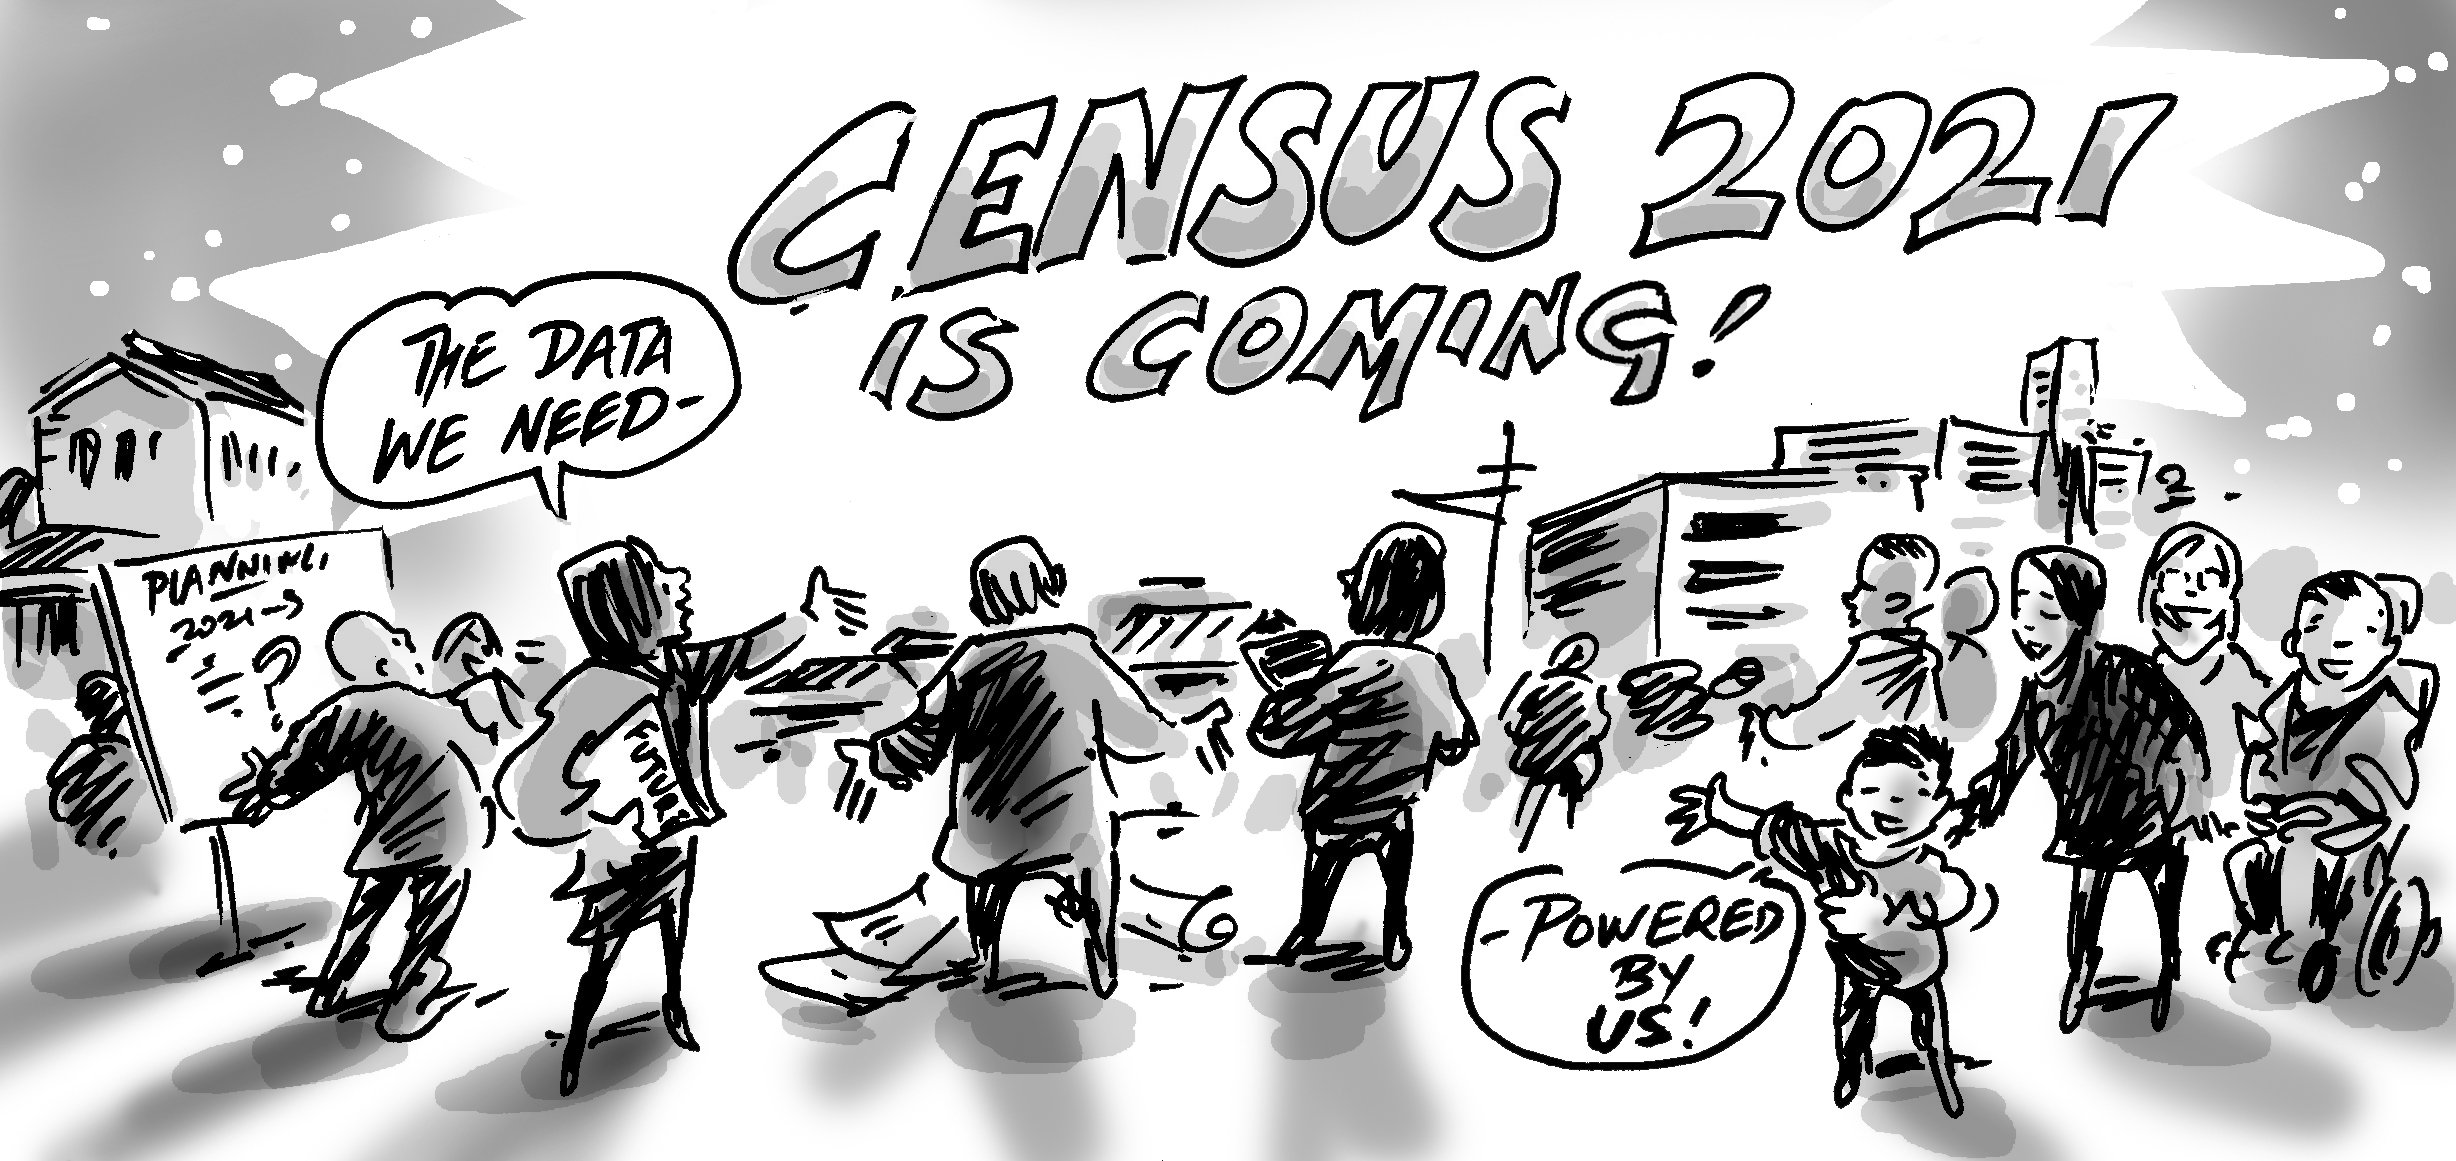 Census 2021 coming pic